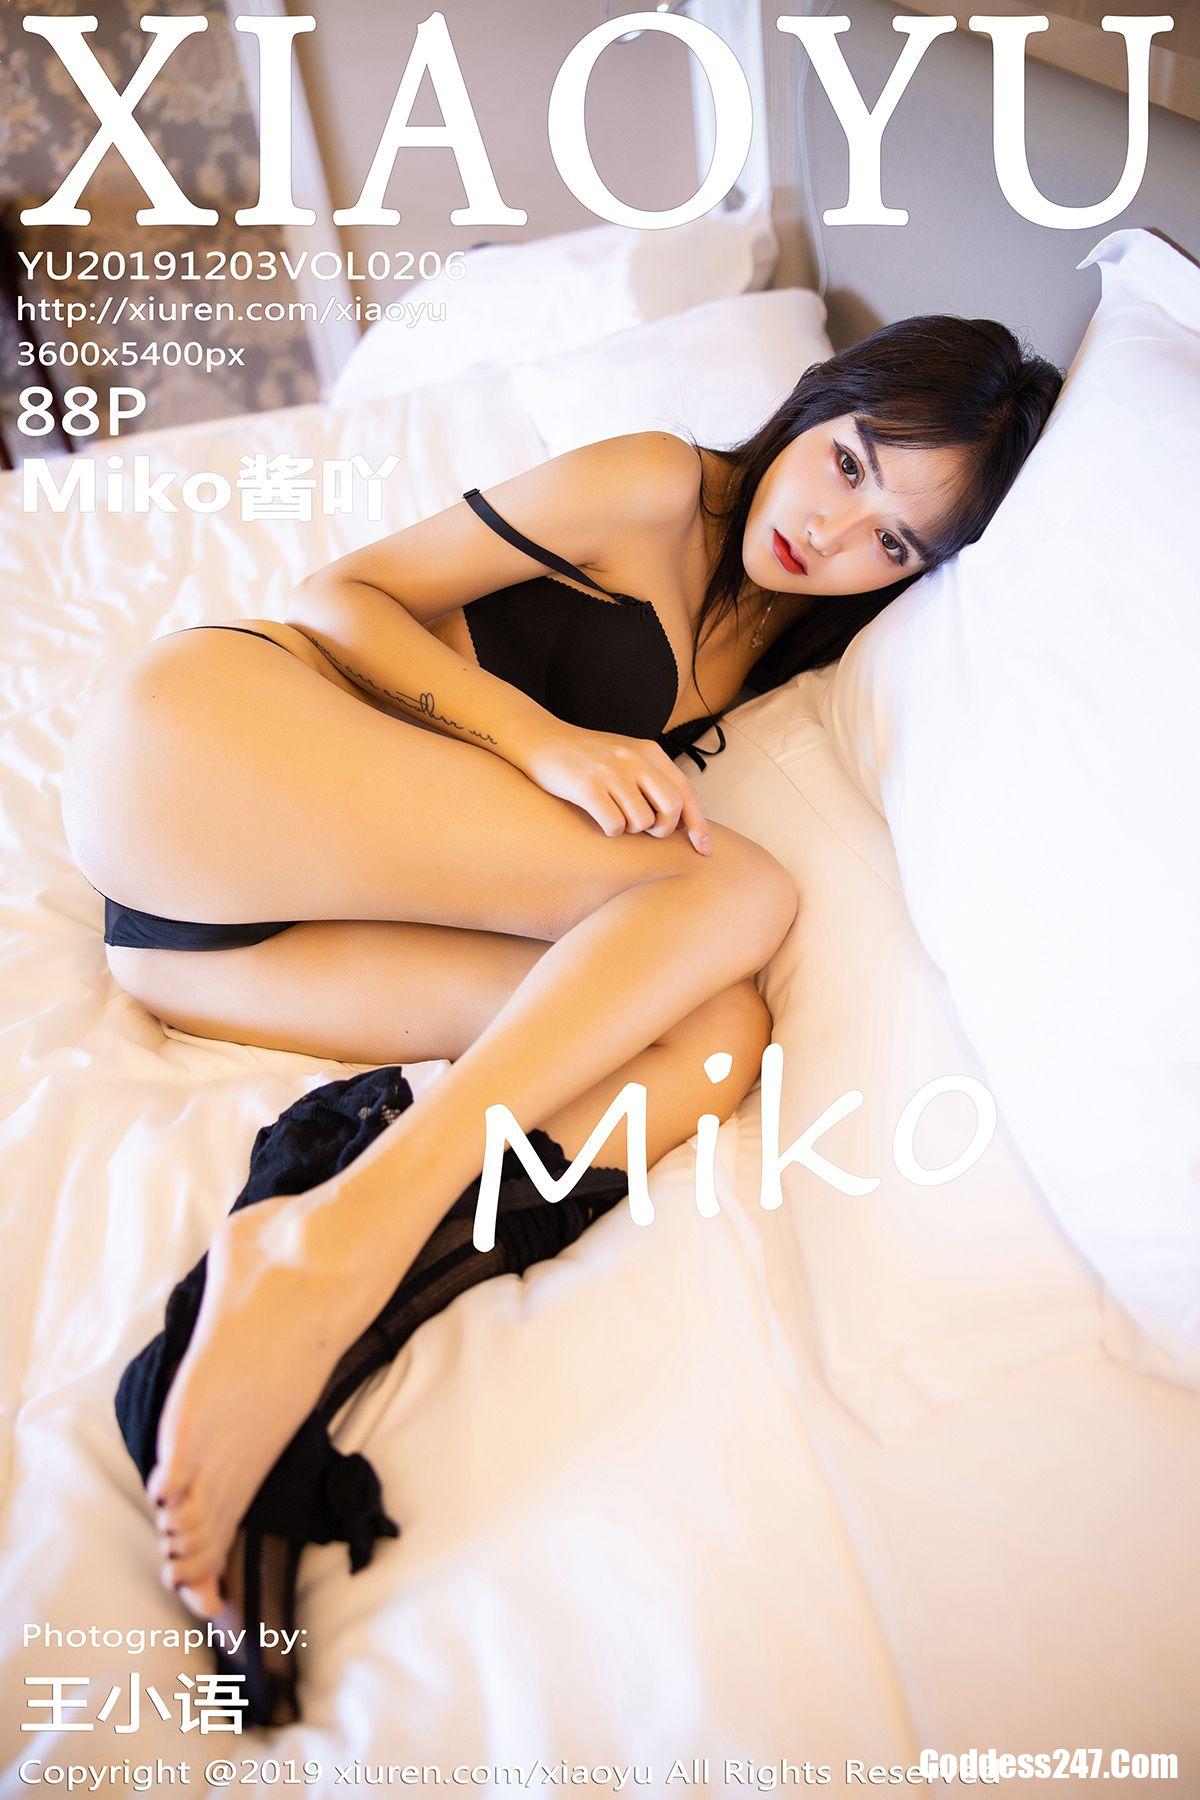 XiaoYu Vol.206 Miko酱吖 1